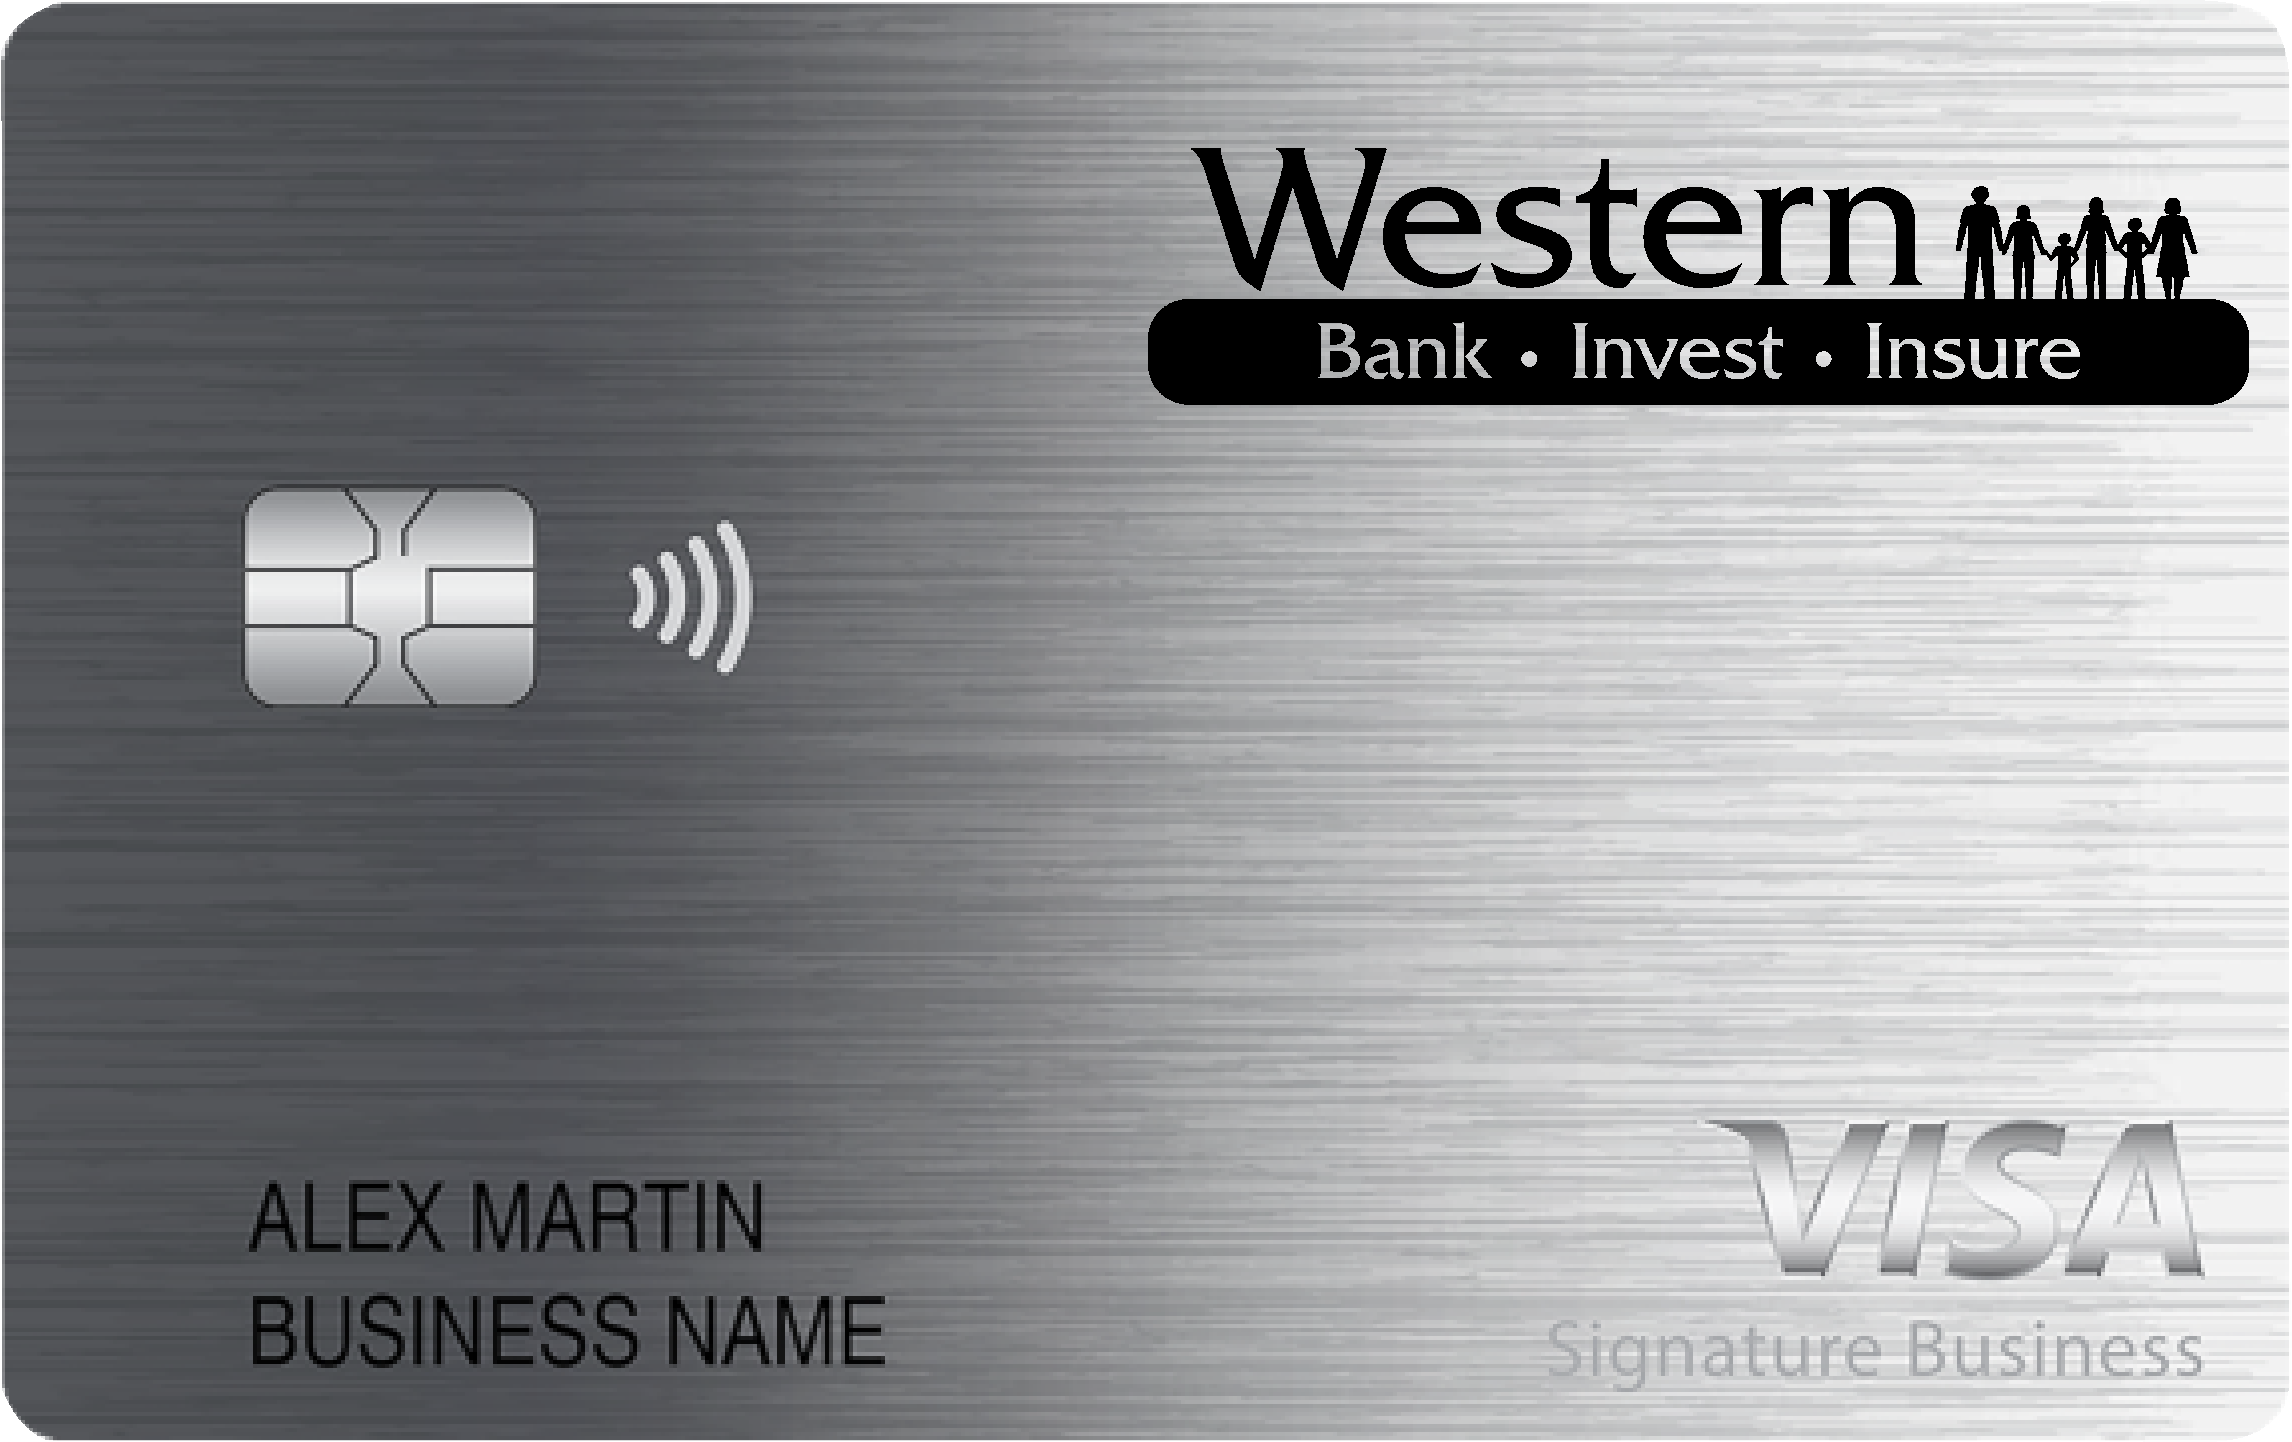 Western State Bank Smart Business Rewards Card